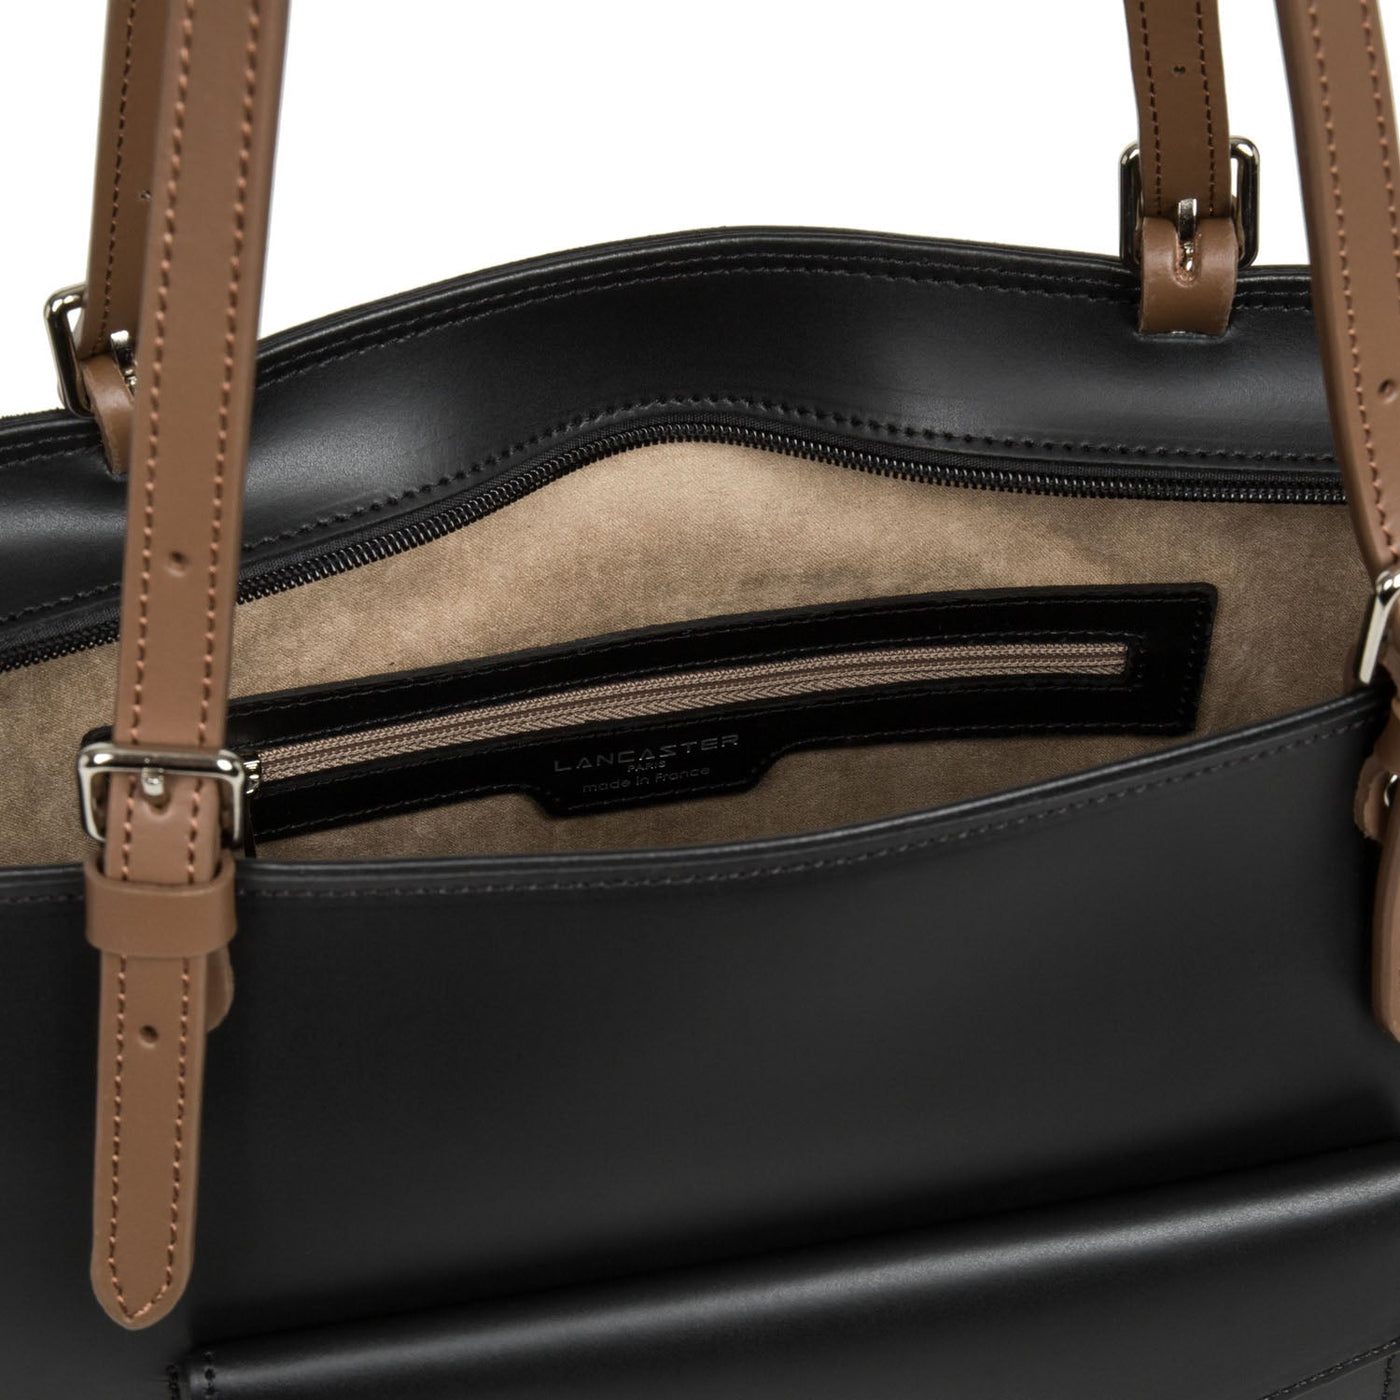 tote bag - smooth #couleur_noir-nude-vison